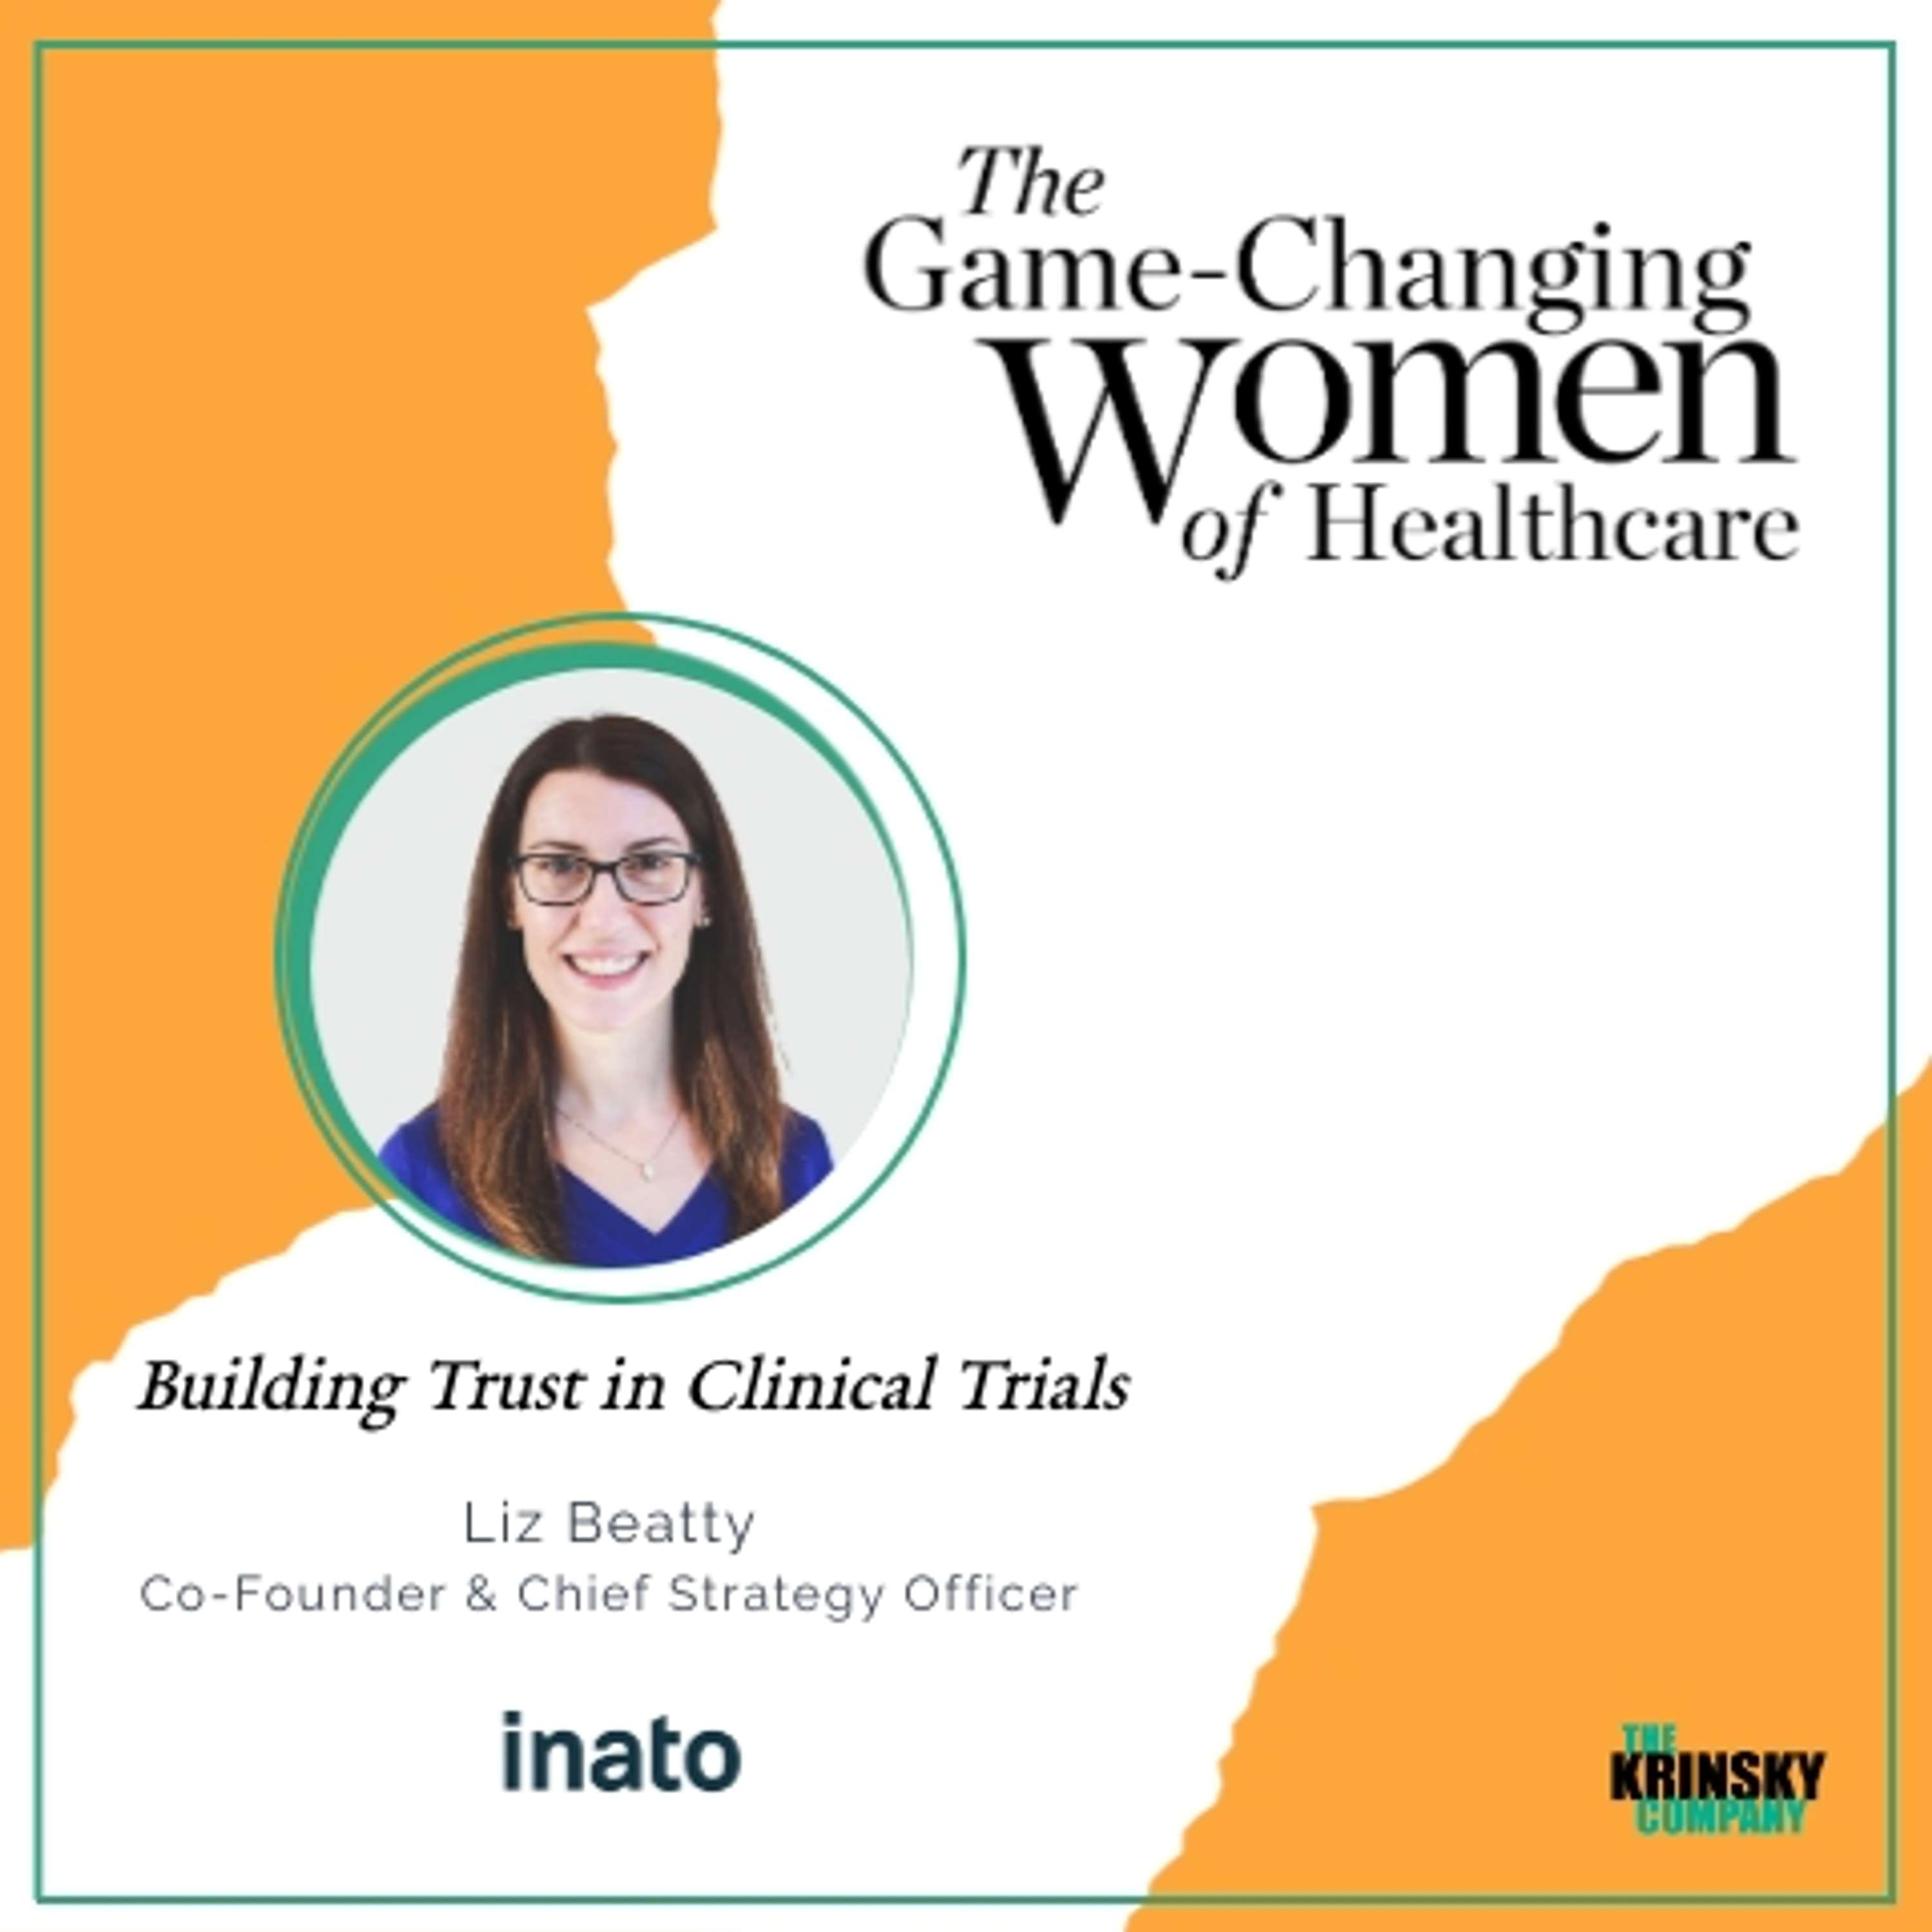 Liz Beatty: Building Trust in Clinical Trials